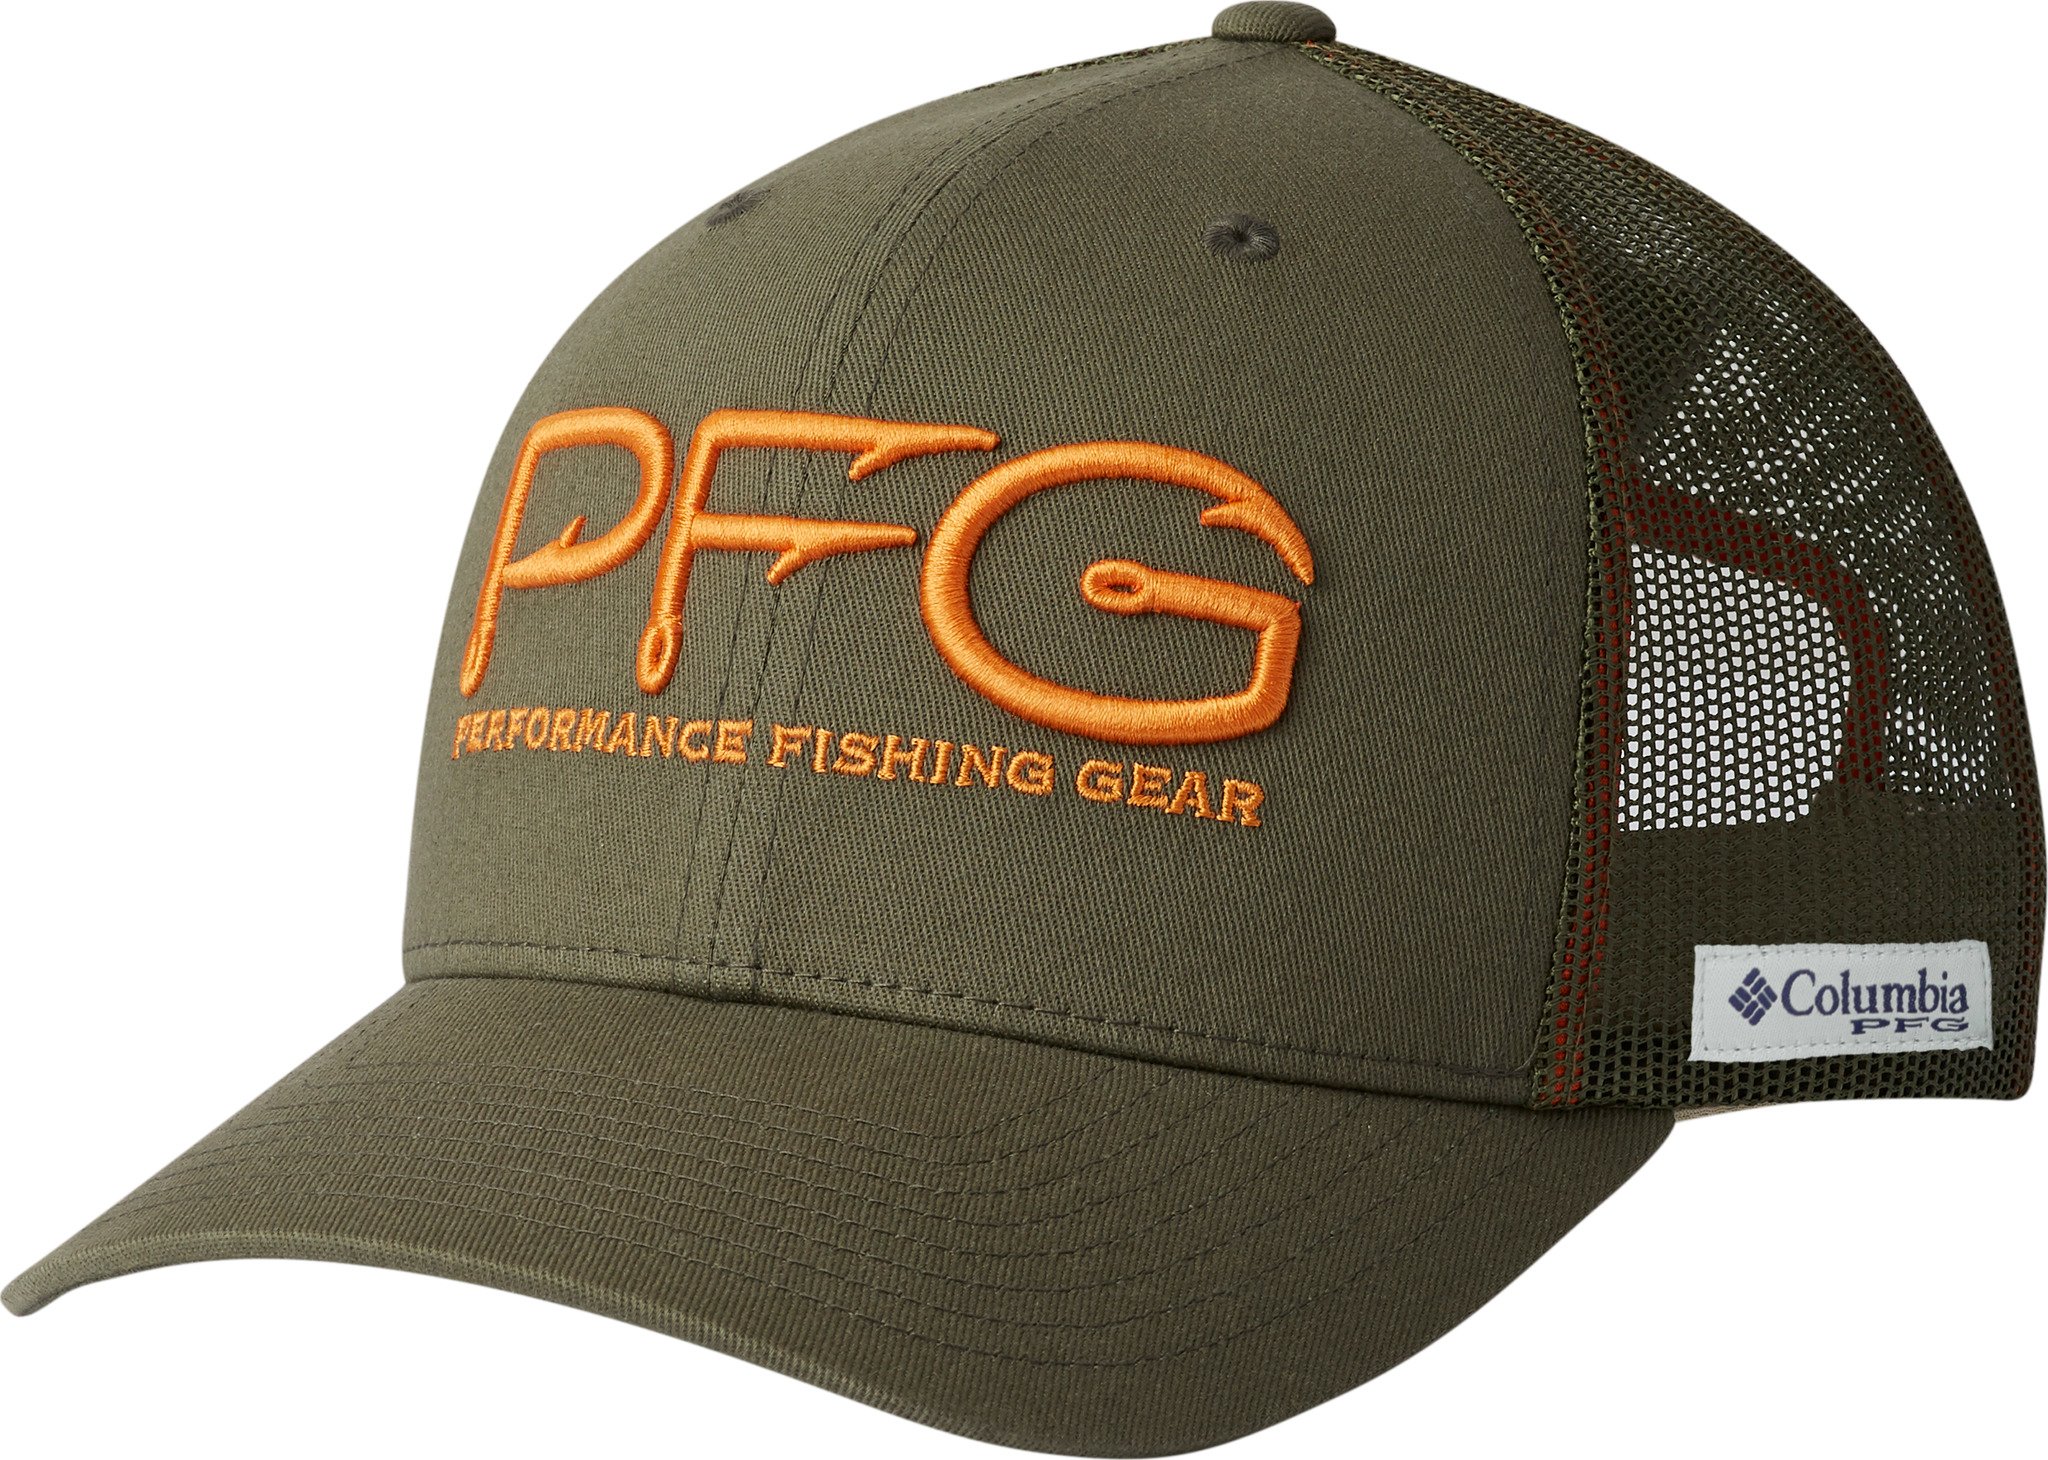 Columbia PFG  Performance Fishing Gear